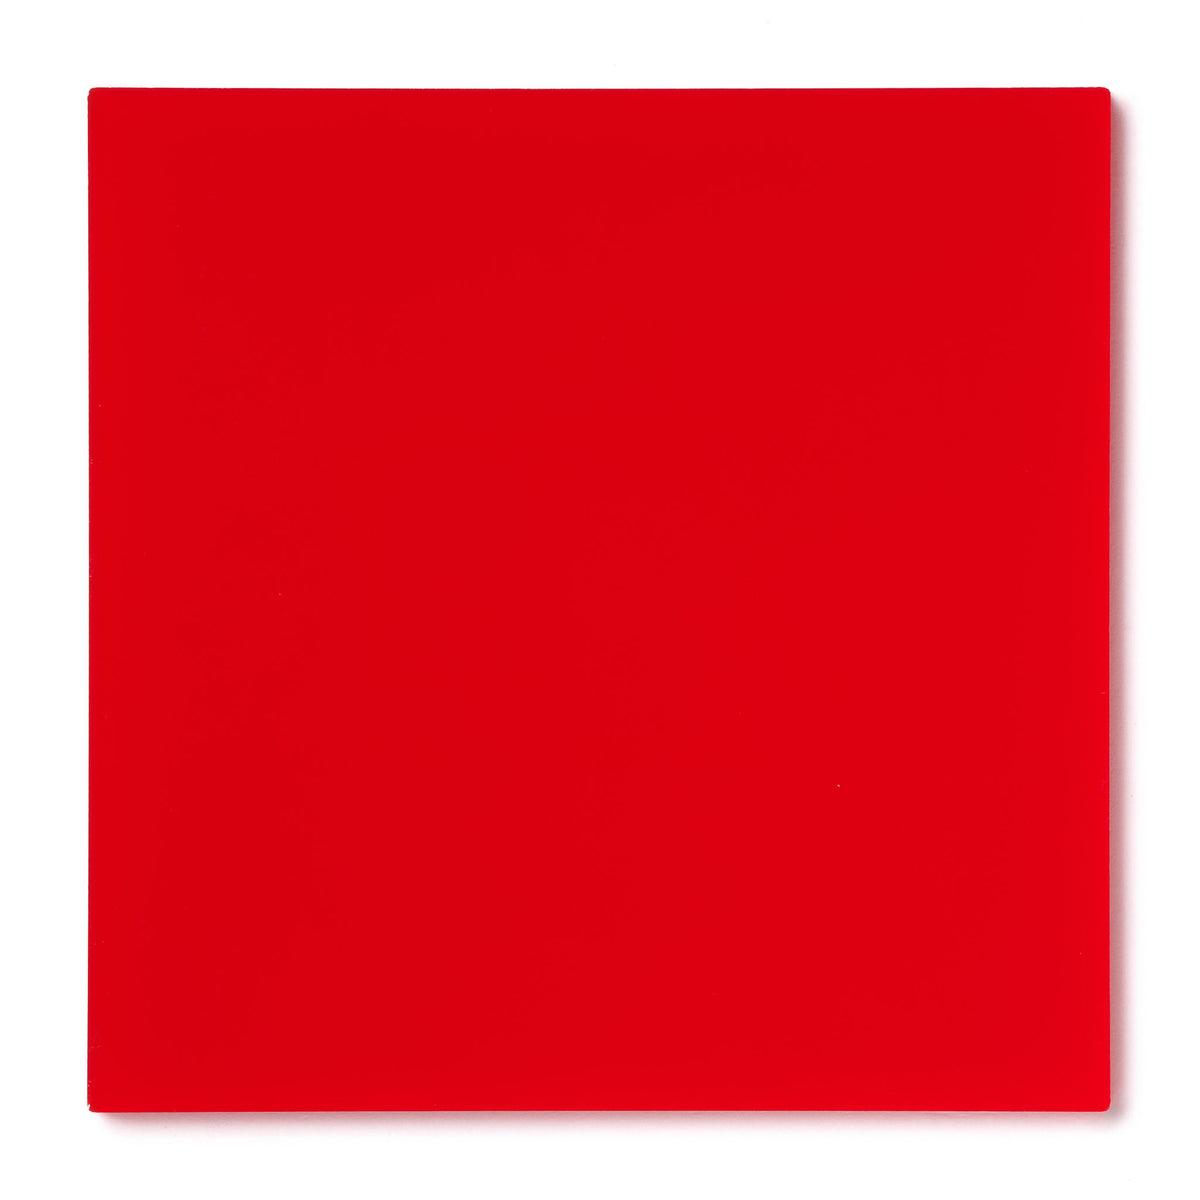 Red Translucent Acrylic Plexiglass Sheet, color 2423